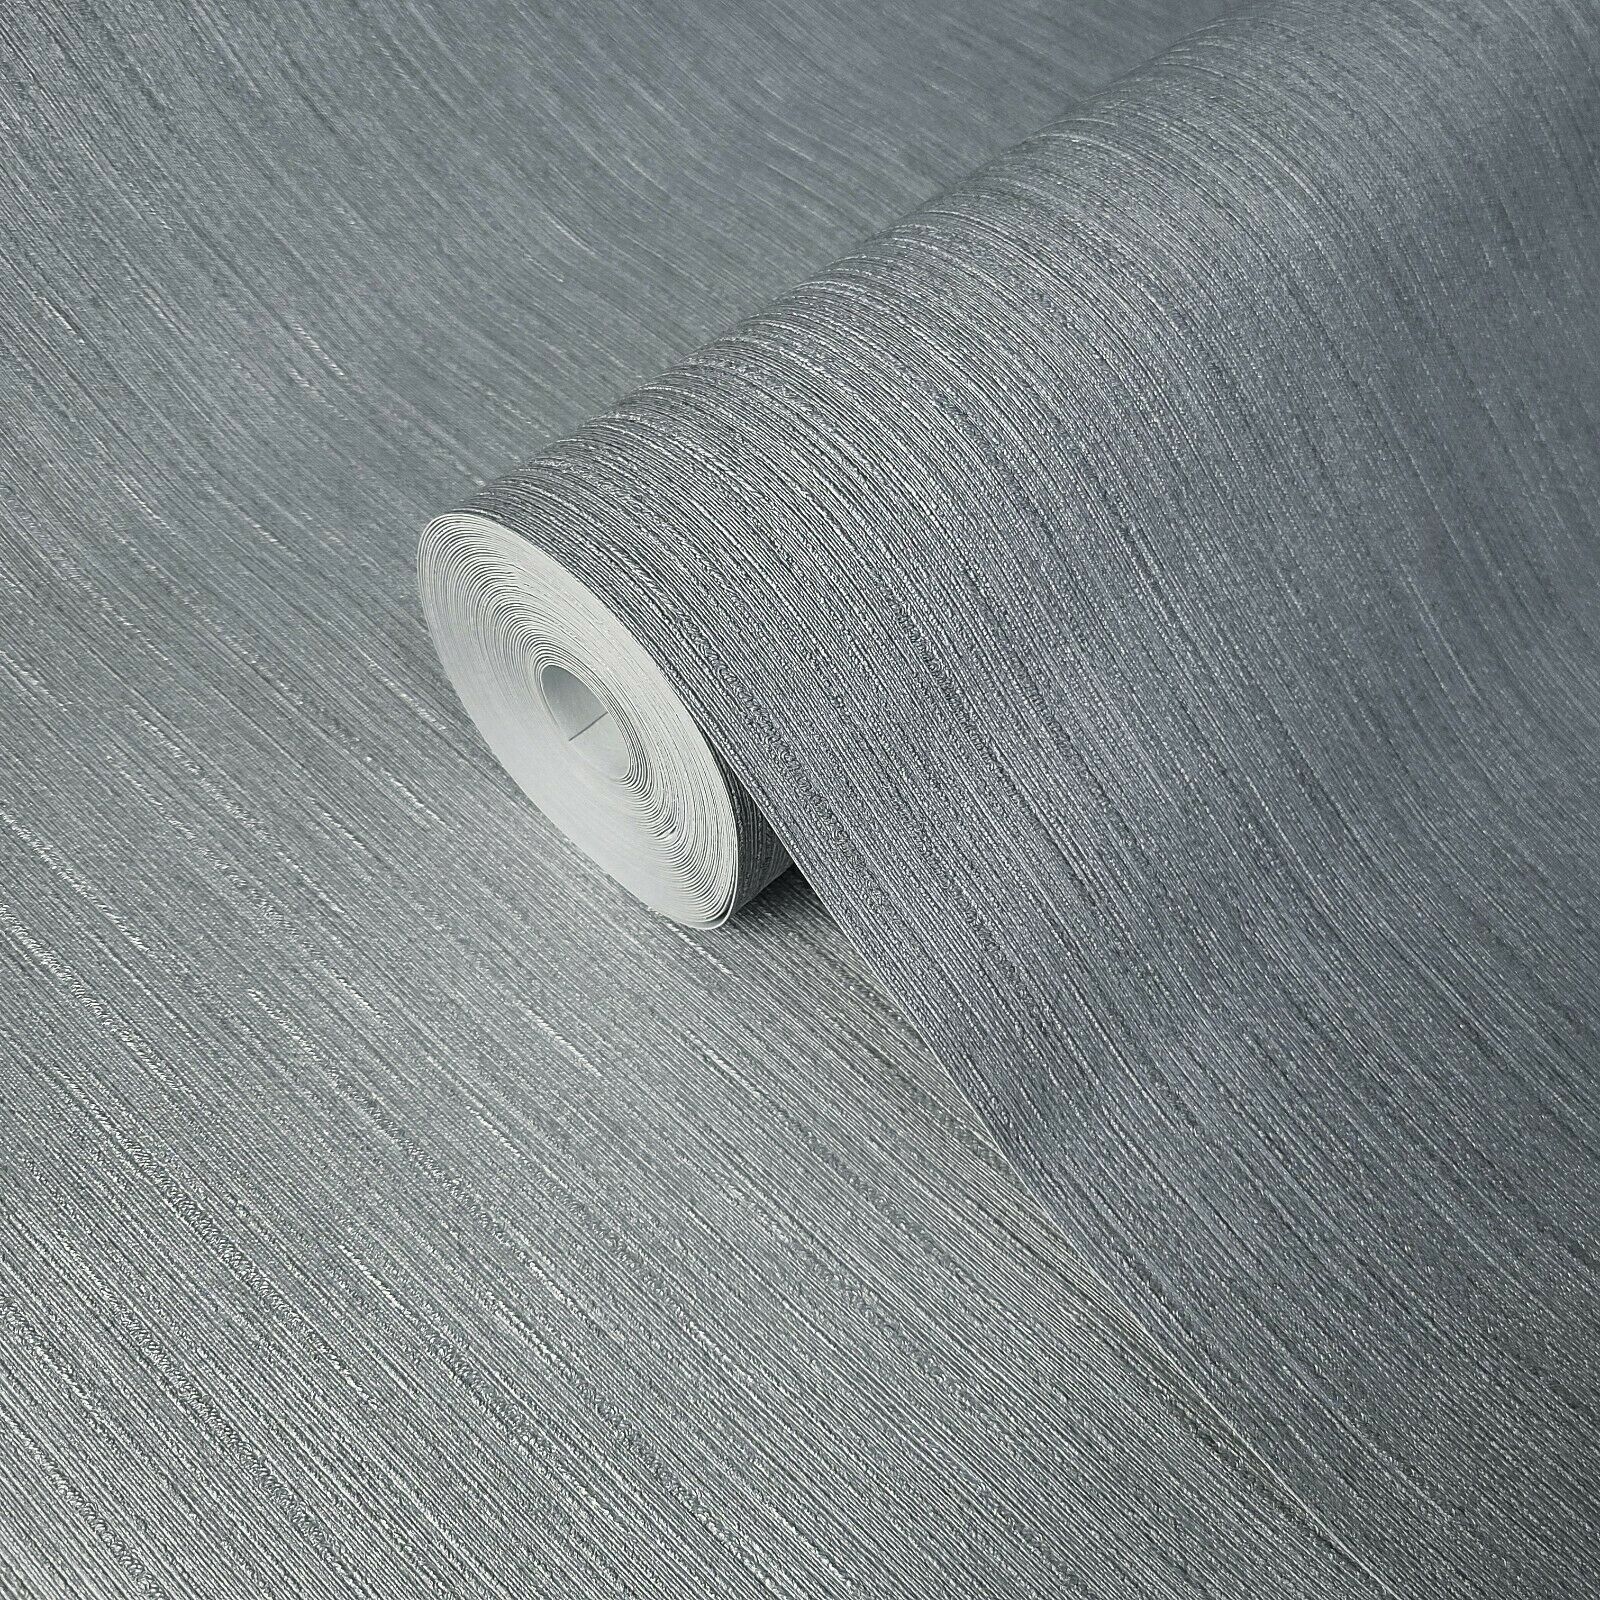 Z72008 Zambaiti silver metallic faux fabric textured stria lines 